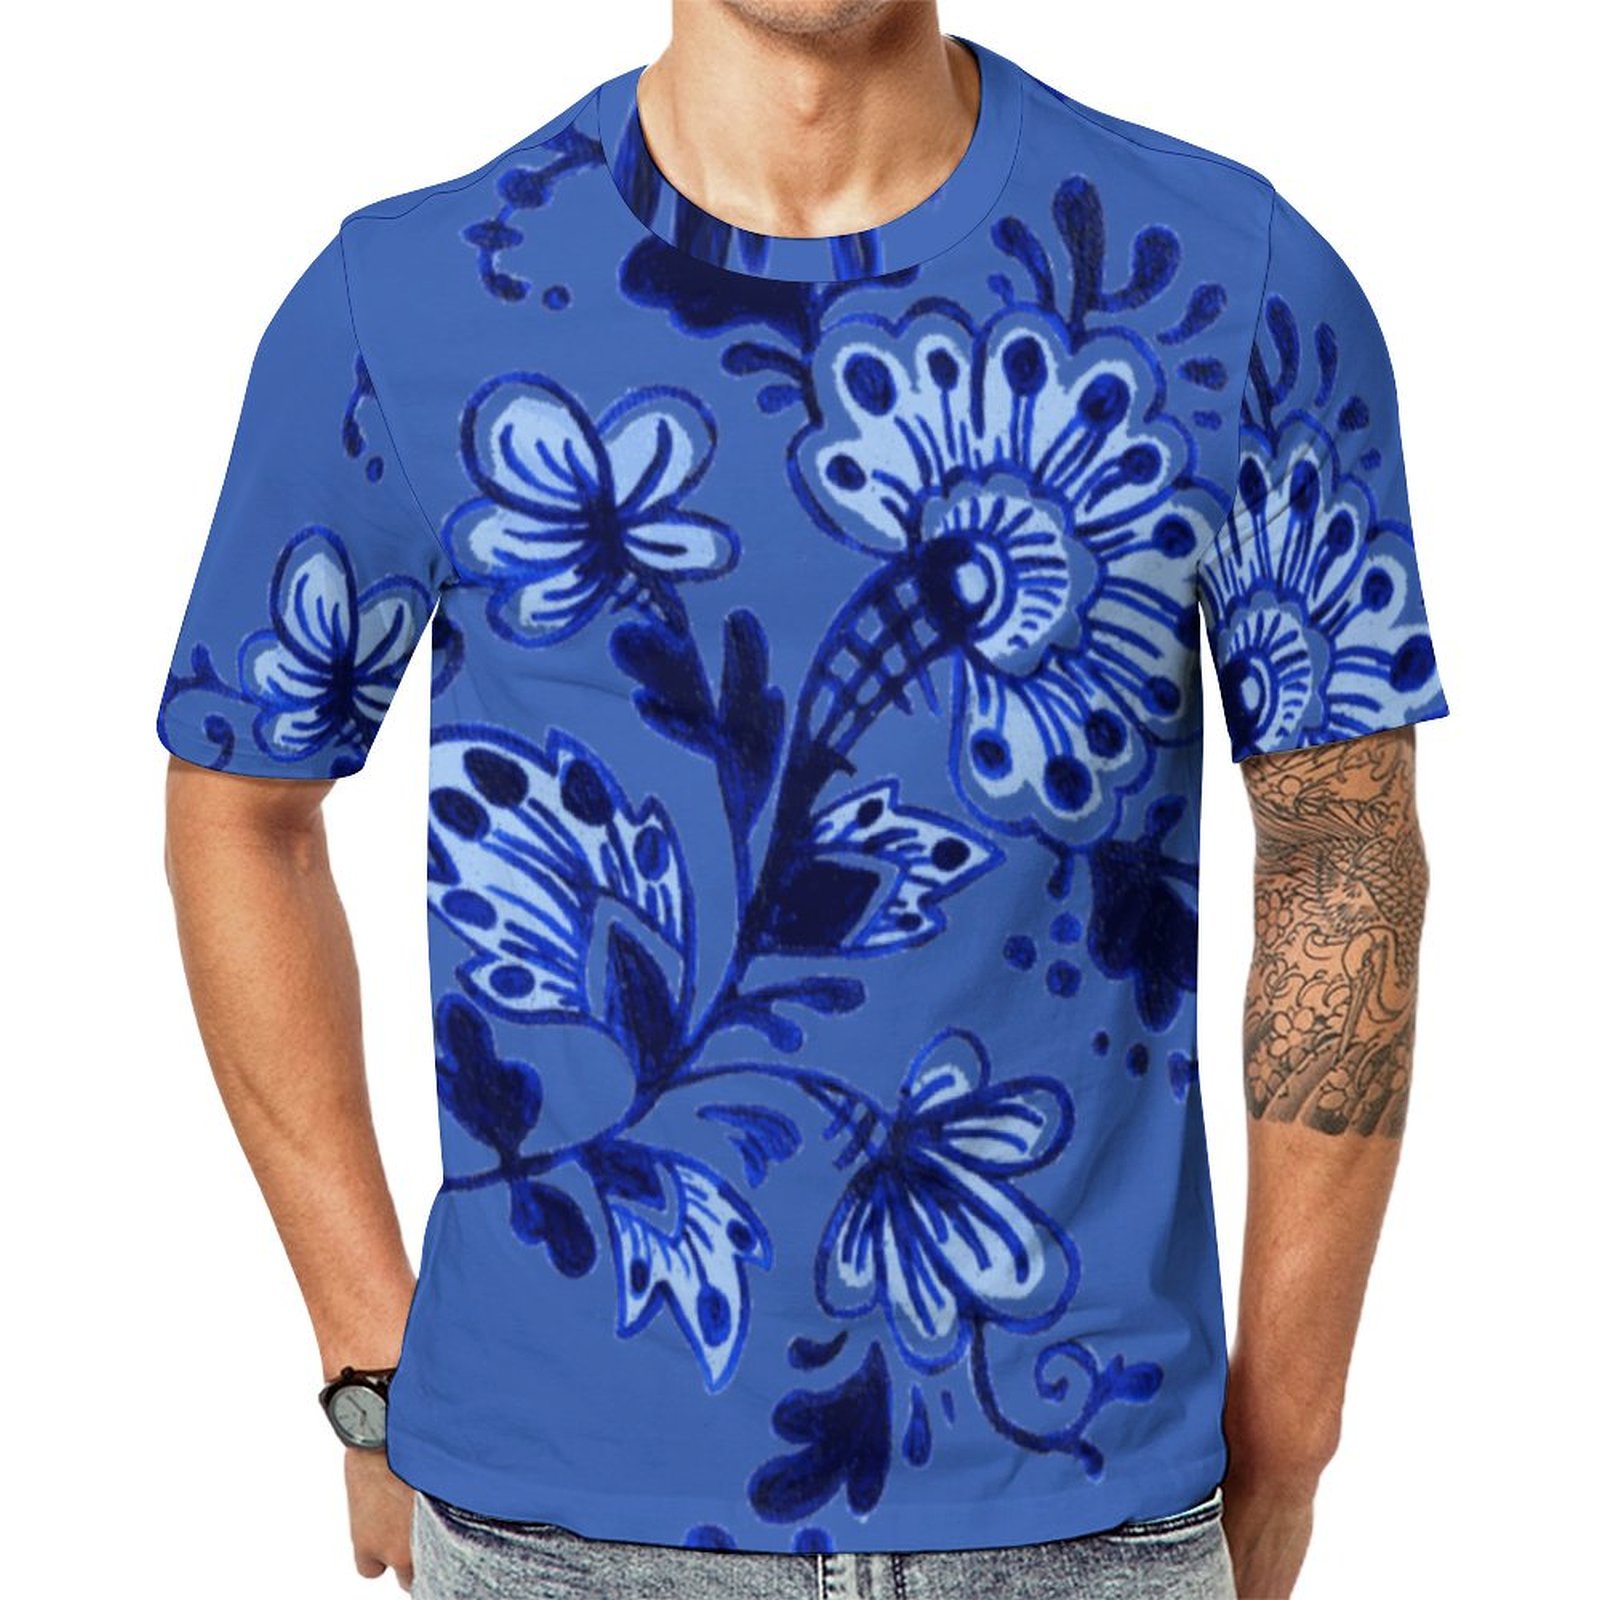 Elegant Chic Dutch Delft Blue Floral Art Short Sleeve Print Unisex Tshirt Summer Casual Tees for Men and Women Coolcoshirts